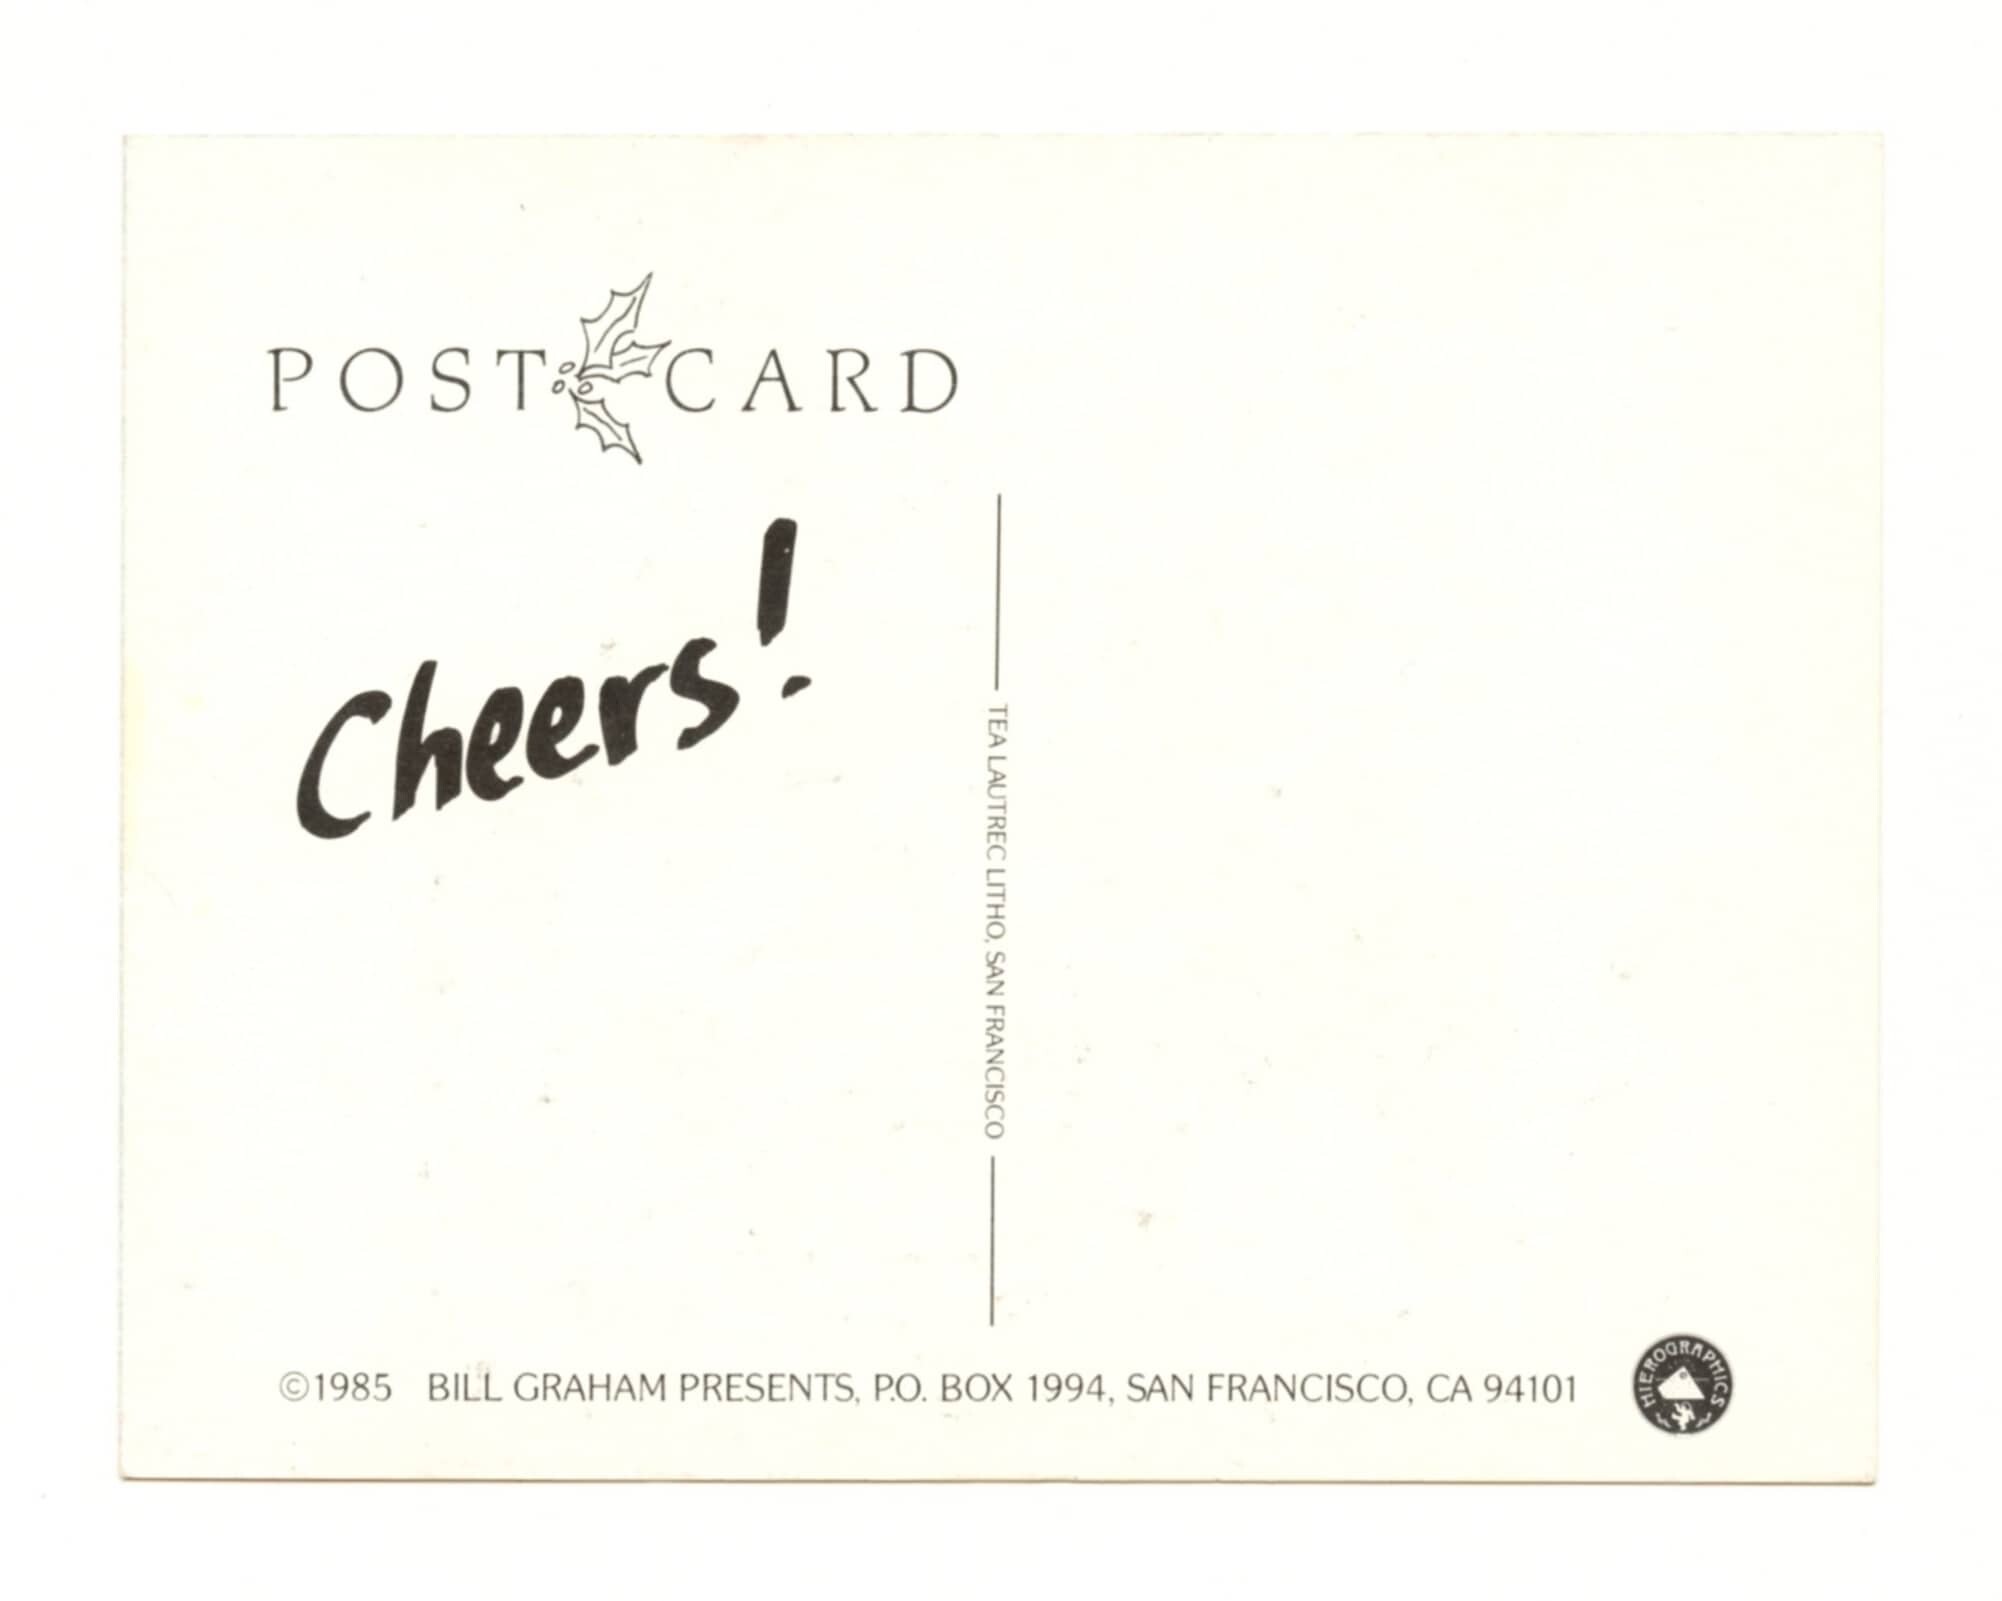 Bill Graham Presents Postcard 1985 Happy Holidays Greeting